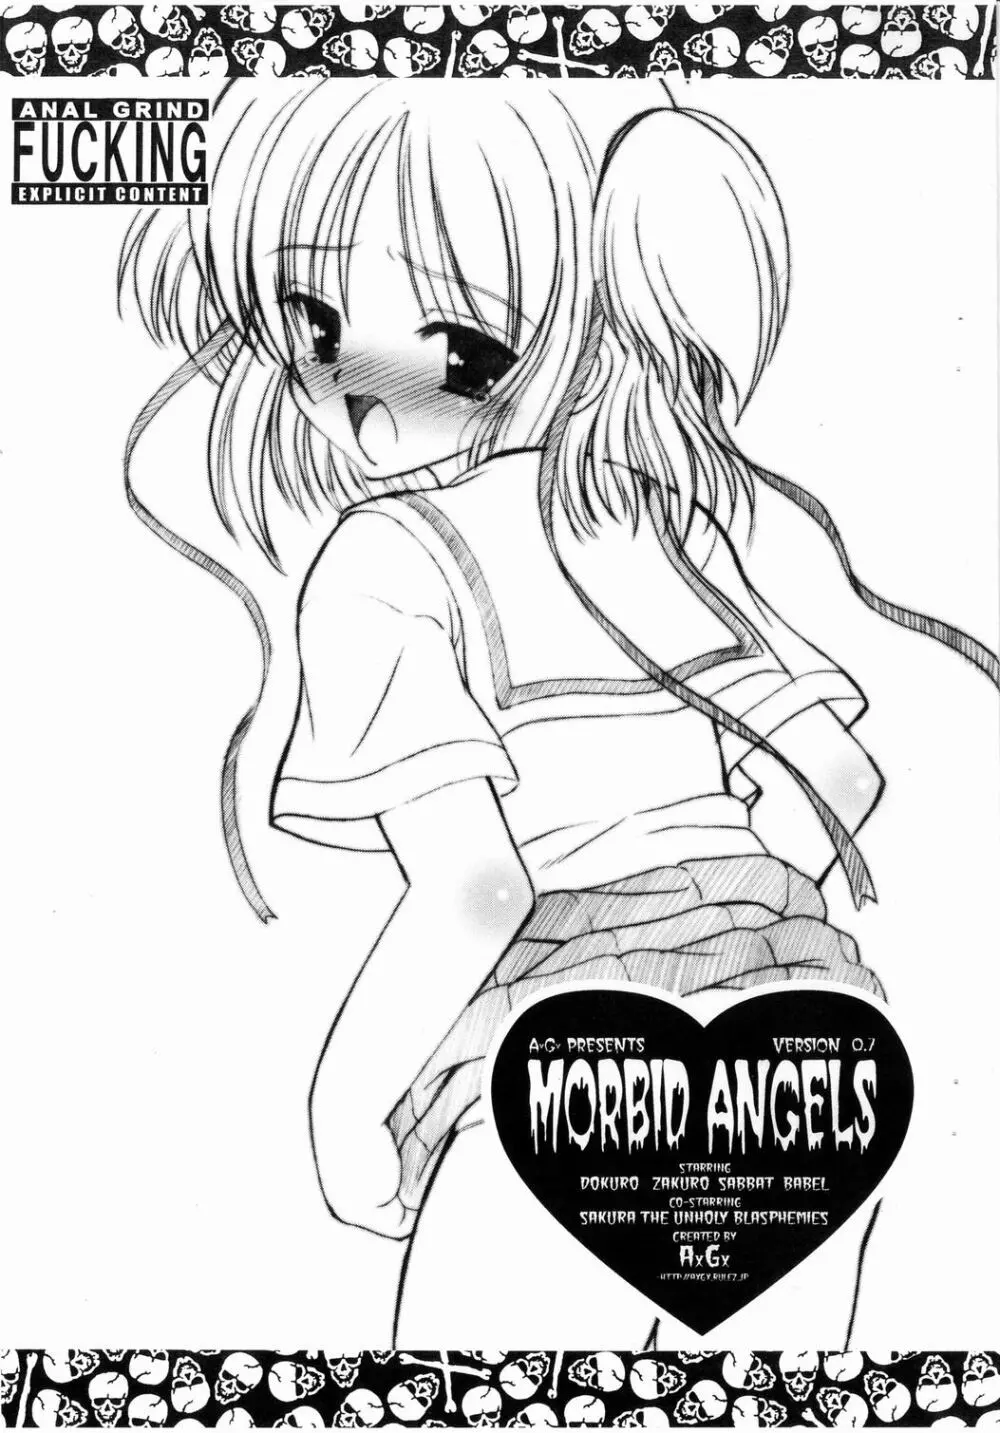 Morbid Angels 0.7 - page1